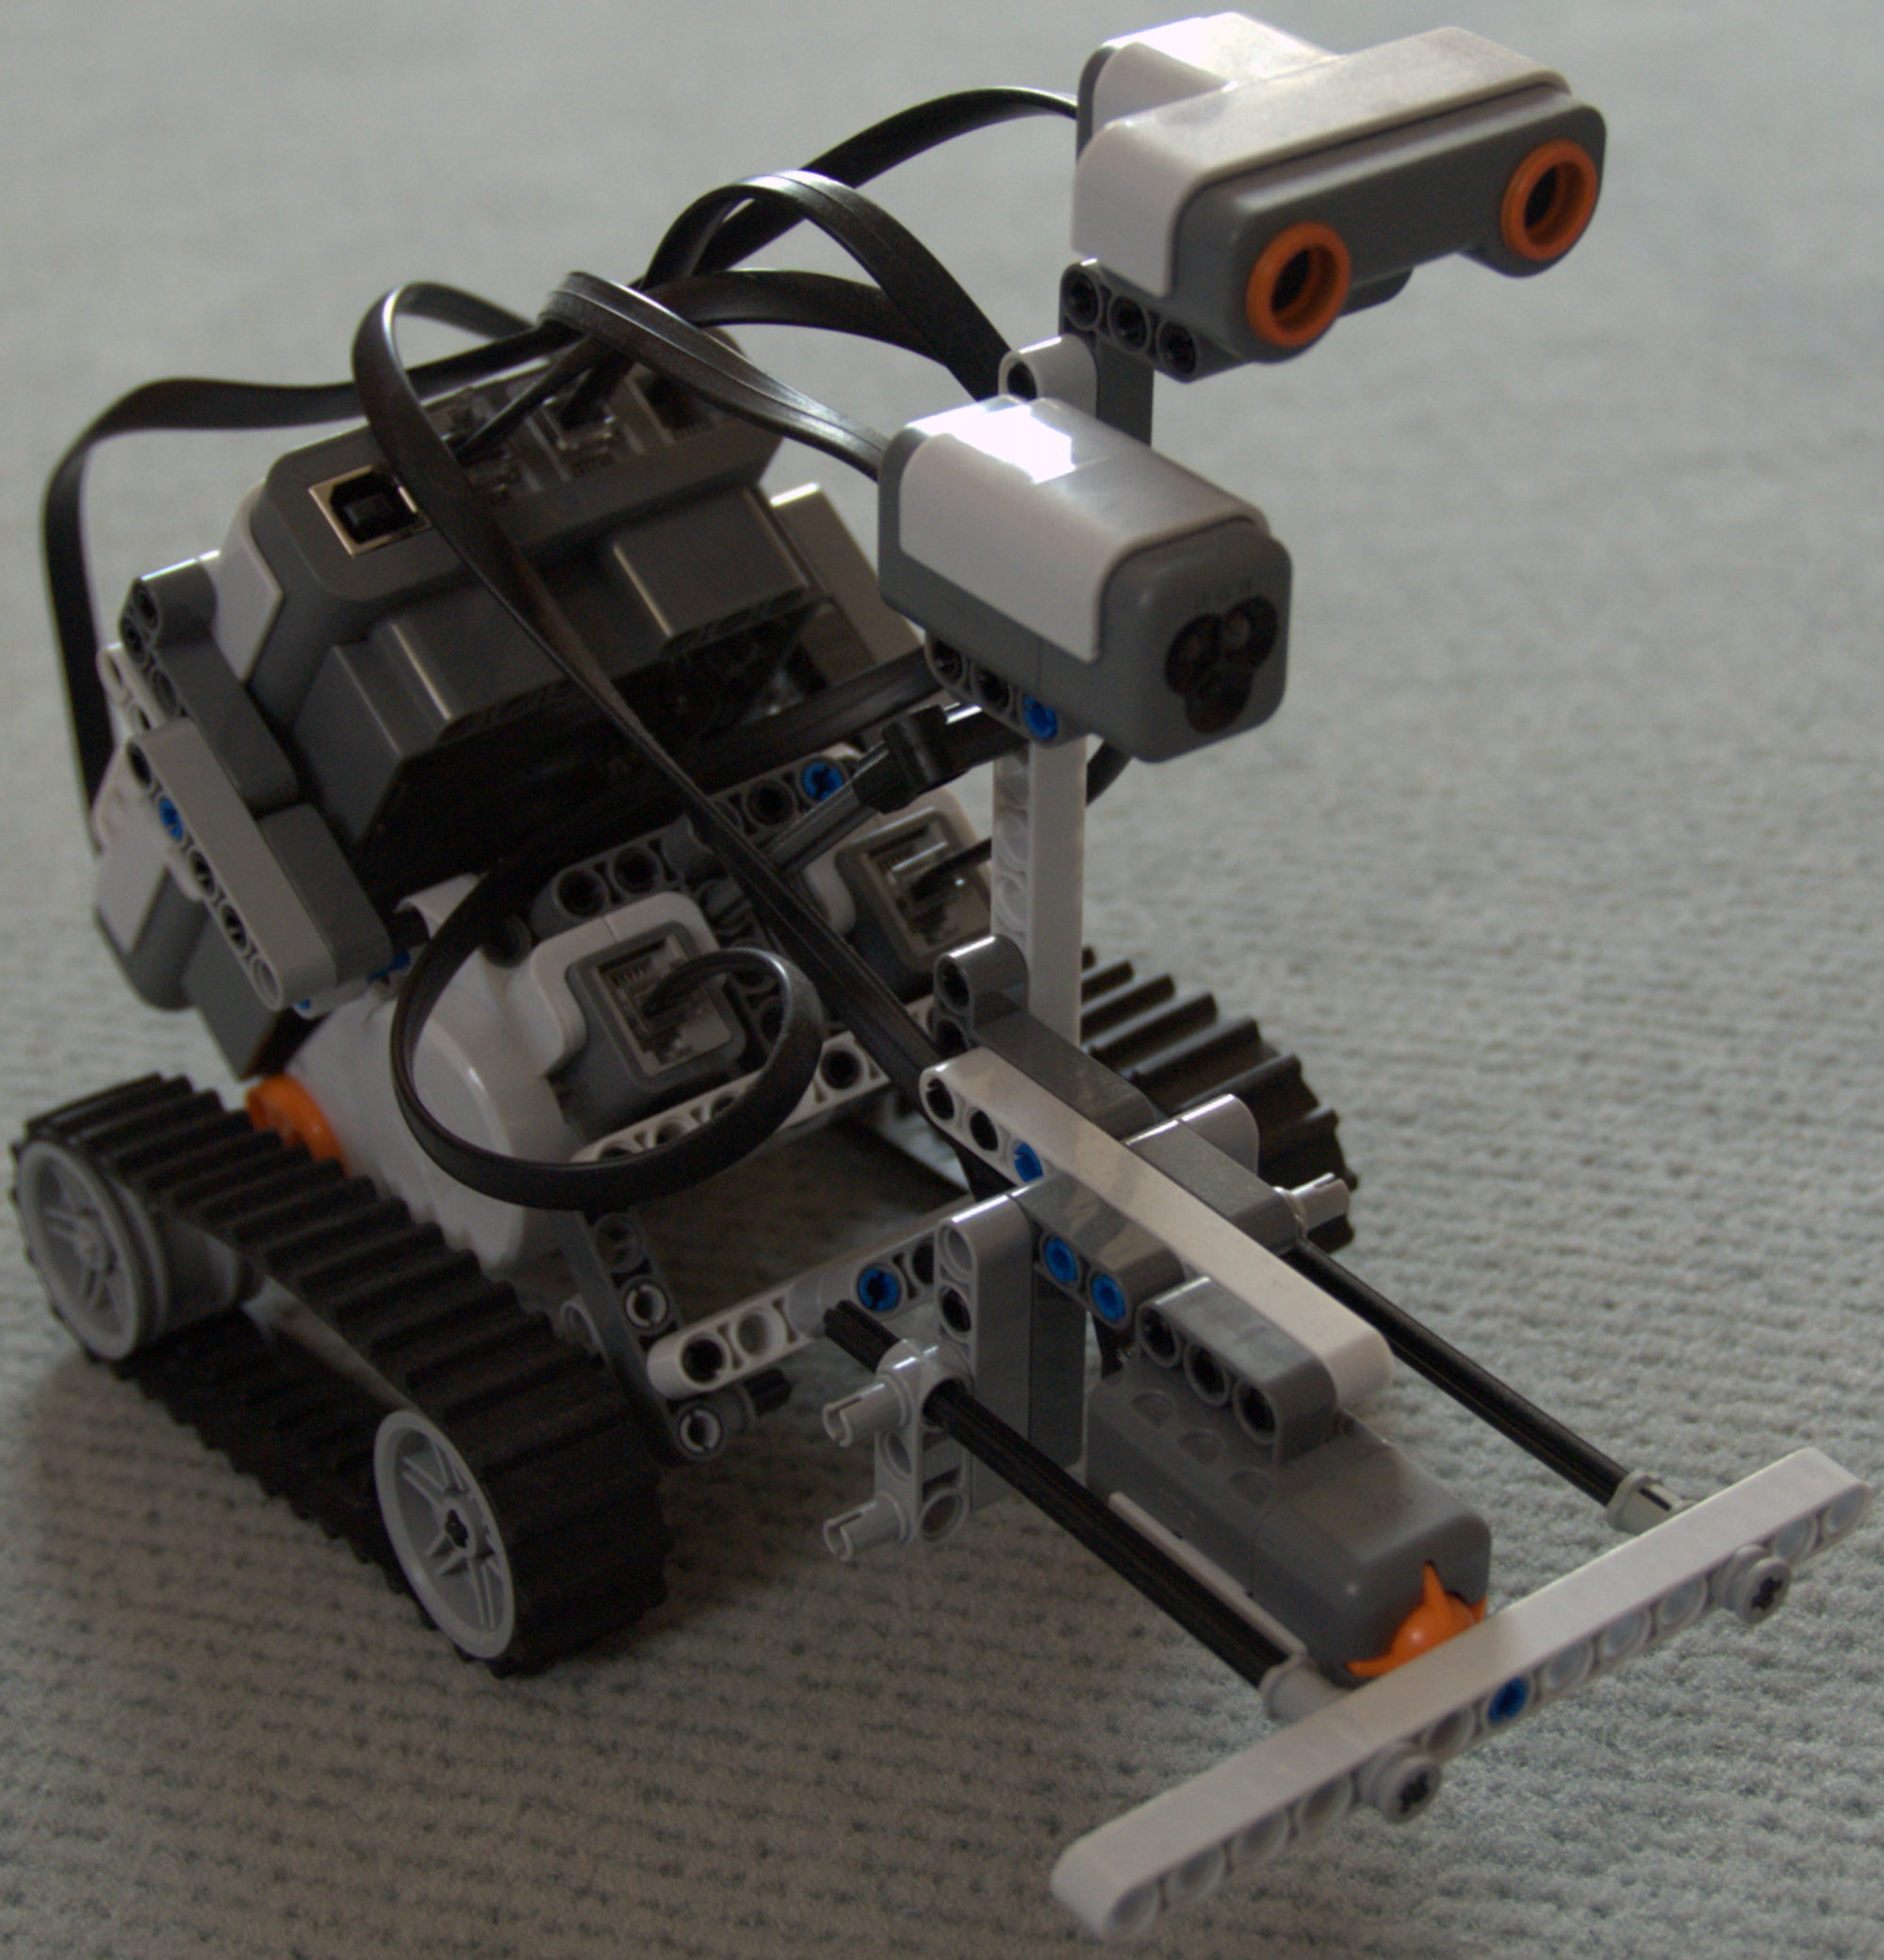 Lego Mindstorms NXT 2.0 - Wikipedia